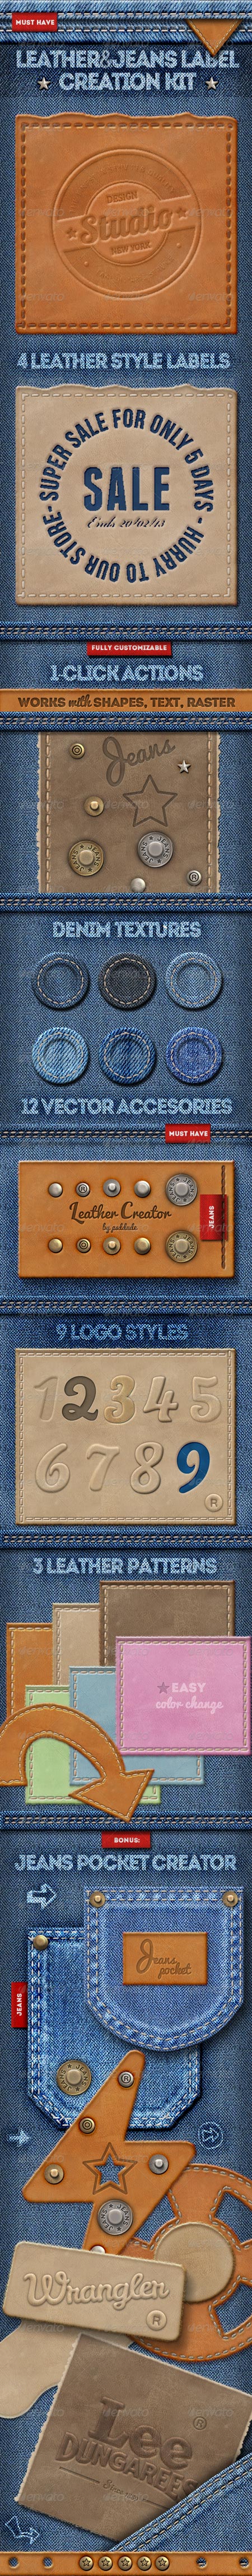 Leather Jeans Label Photoshop Creator 8624339